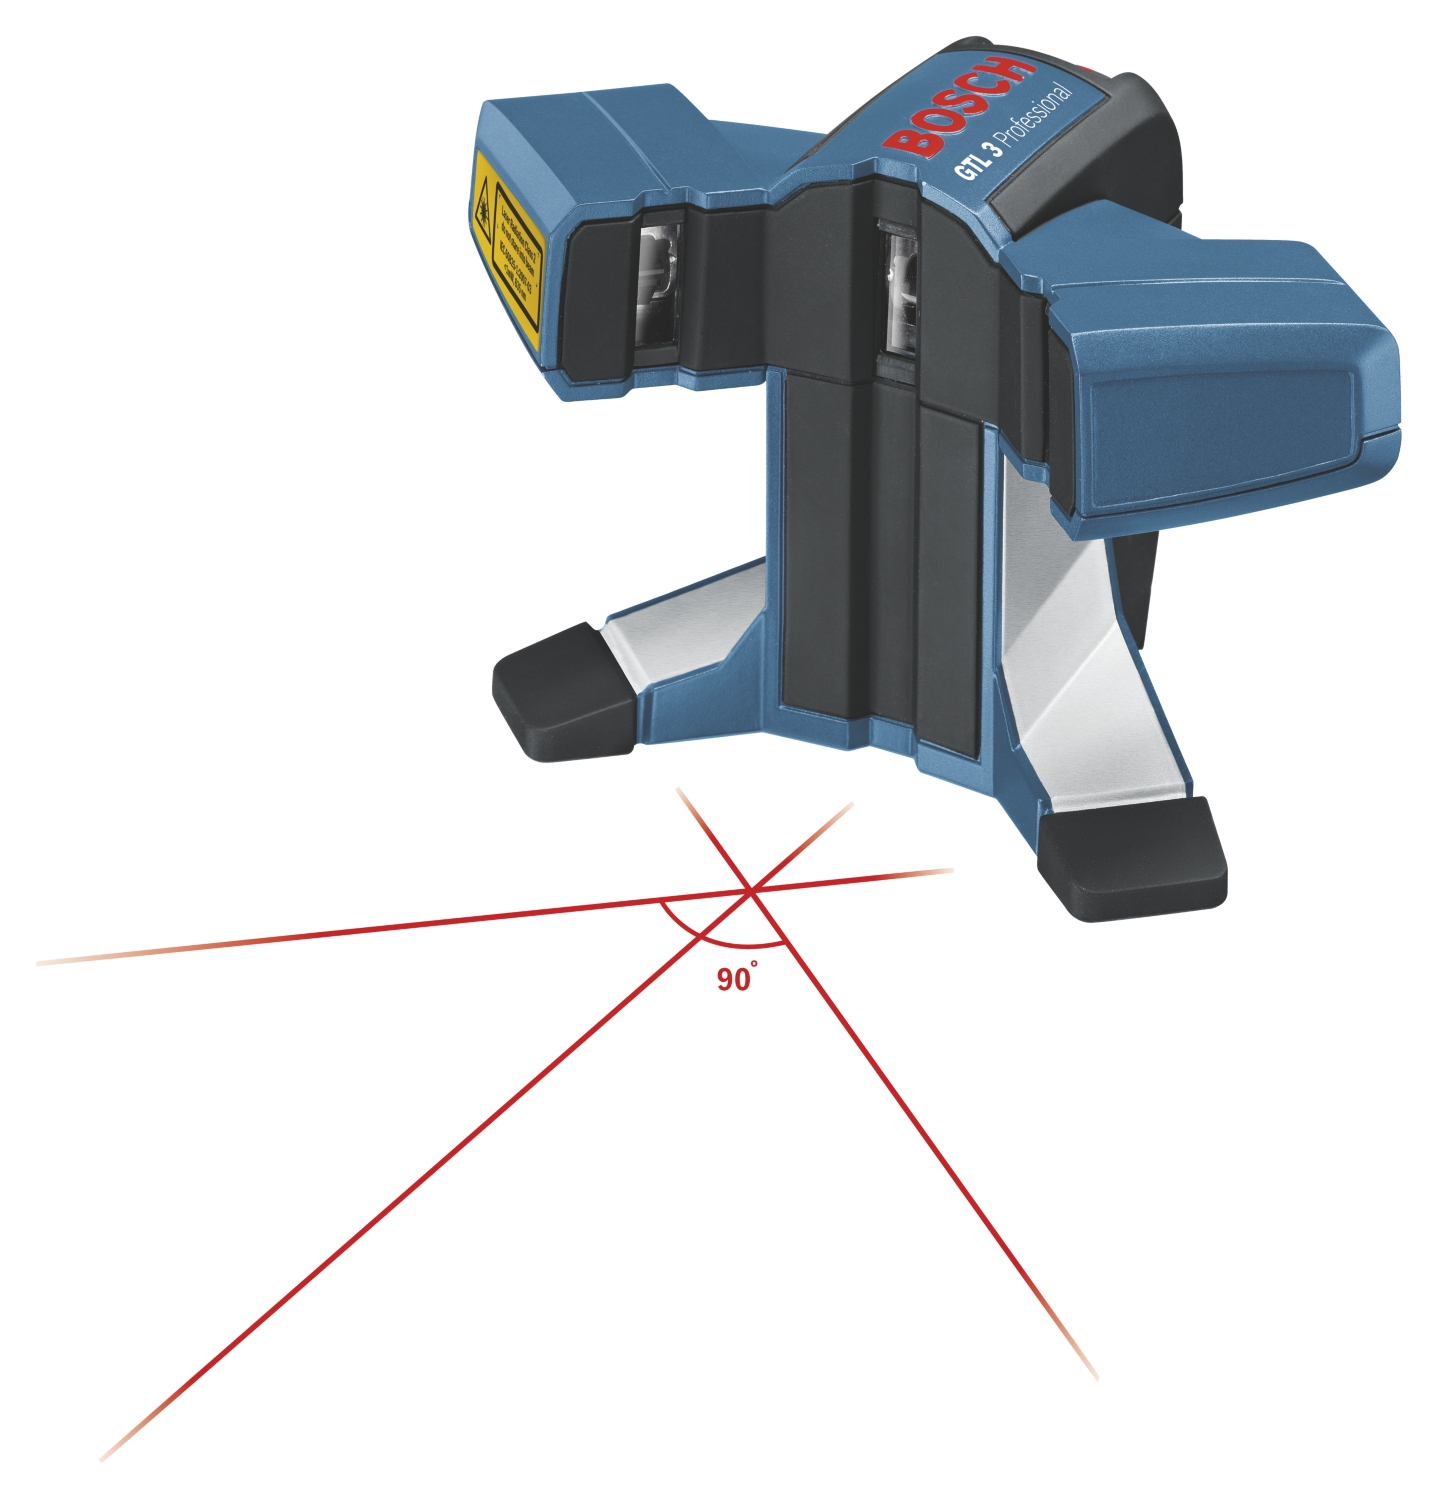 Laser carreleur GTL 3 Professional Bosch Professional